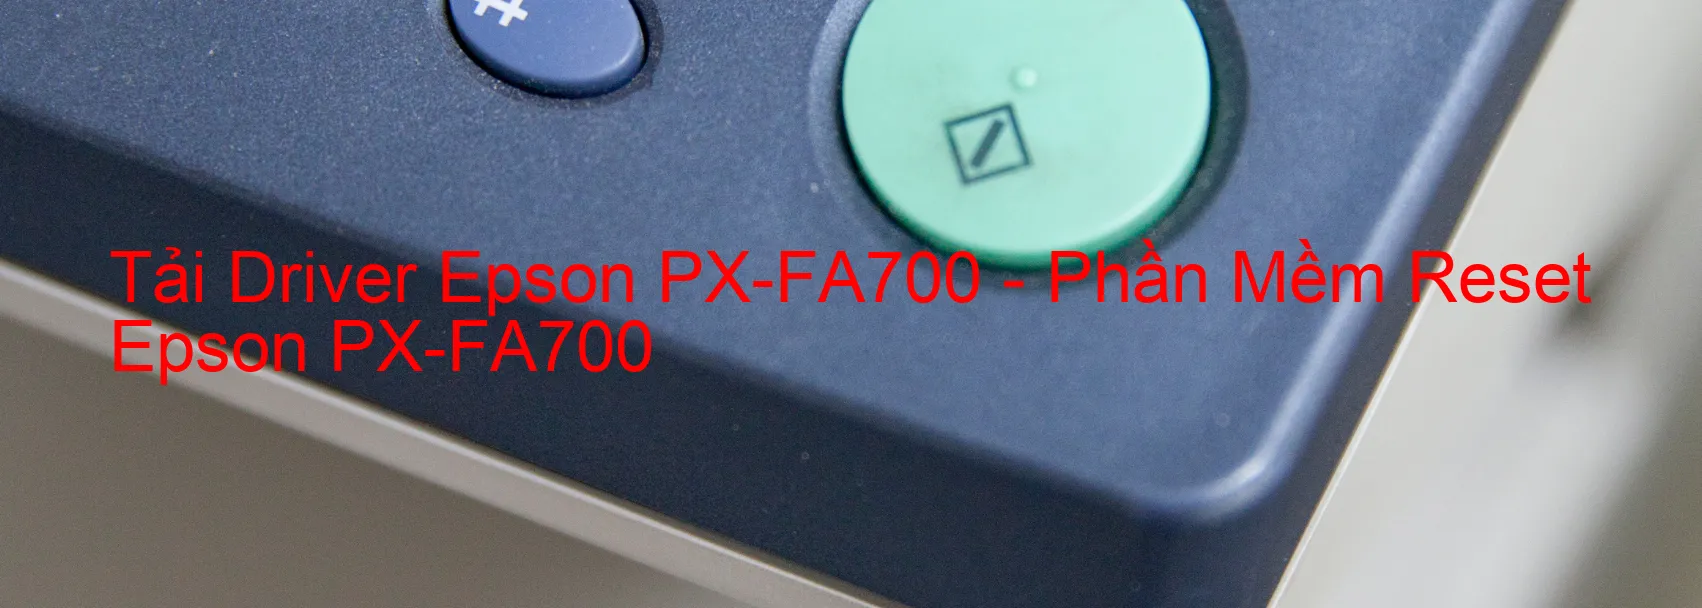 Driver Epson PX-FA700, Phần Mềm Reset Epson PX-FA700